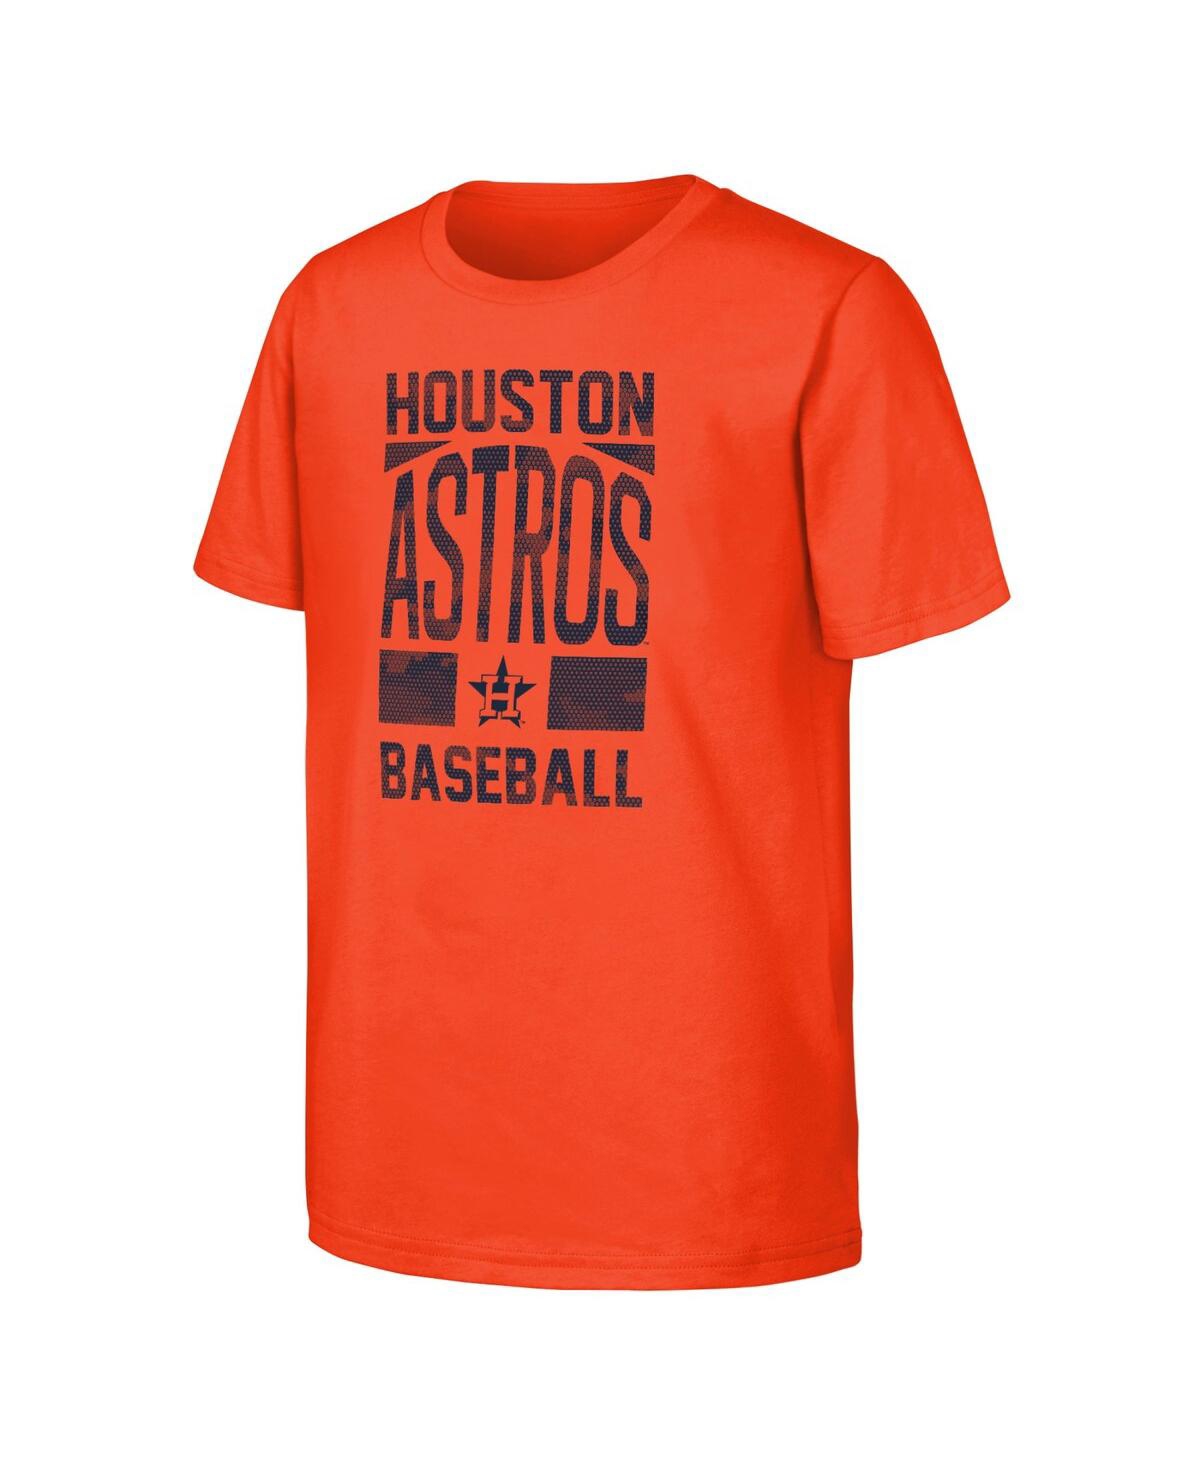 Outerstuff Kids' Big Boys And Girls Fanatics Orange Houston Astros Season Ticket T-shirt